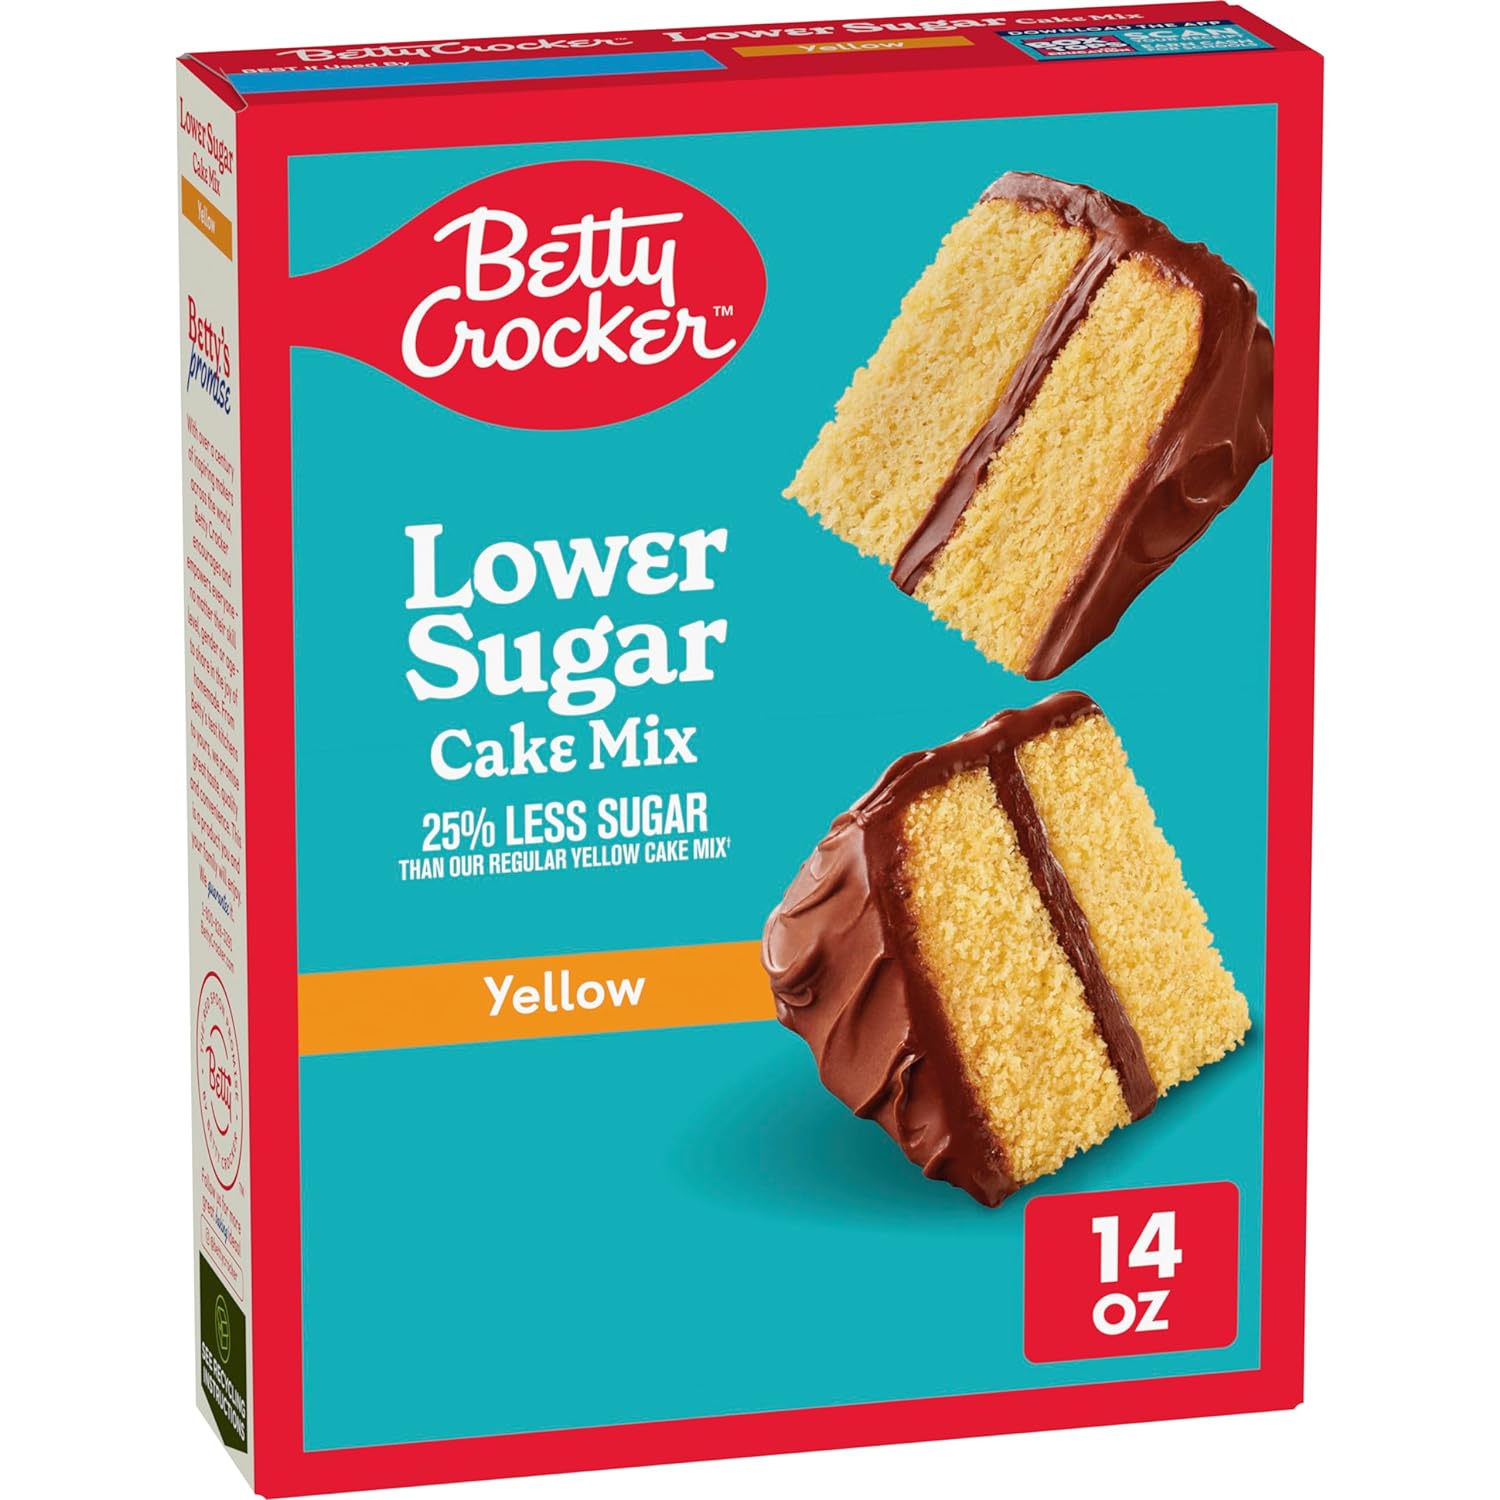 Betty Crocker Lower Sugar Yellow Cake Mix, No Artificial Sweeteners, 14 oz